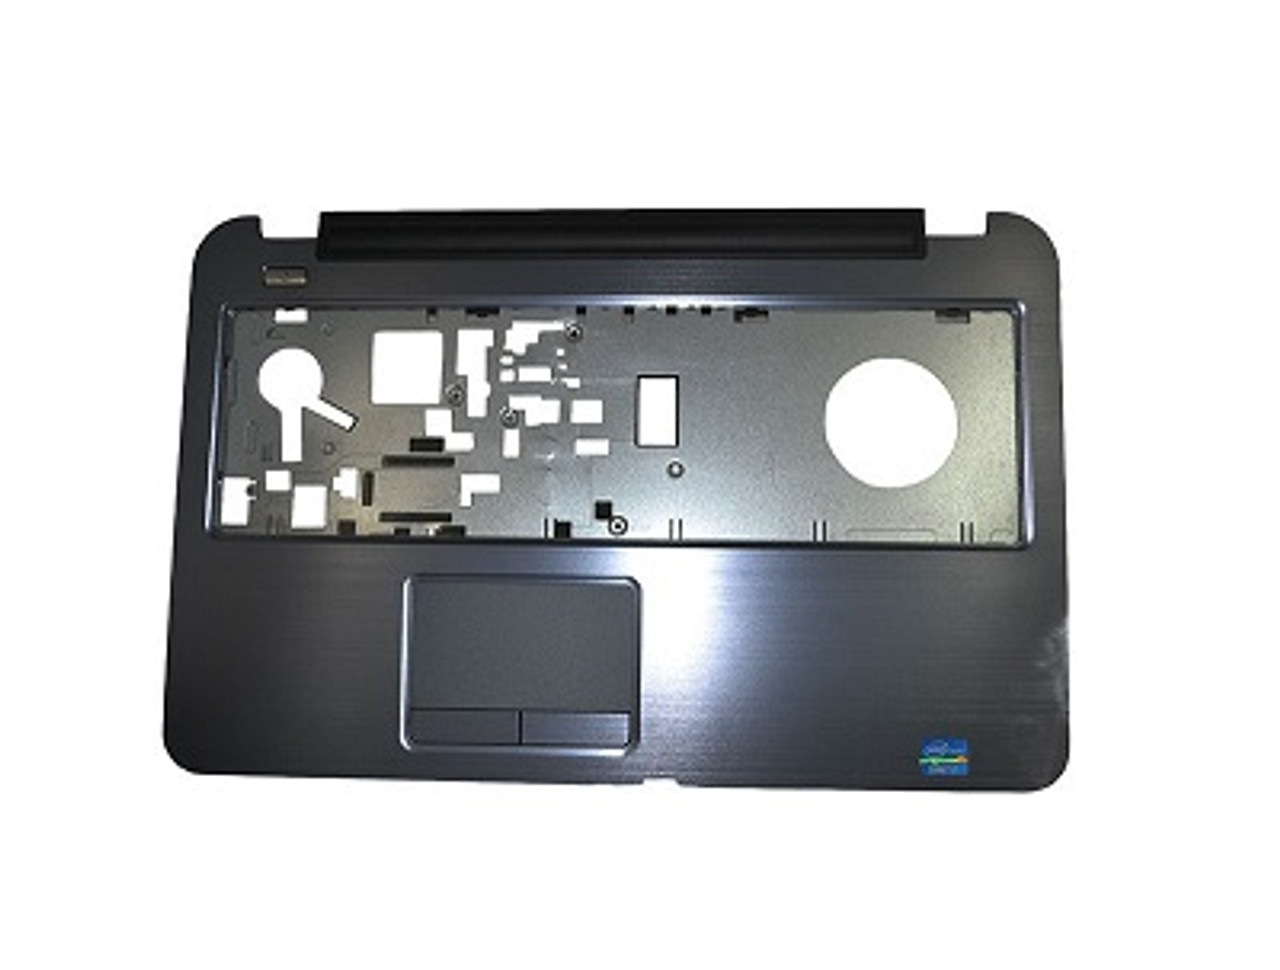 08K4729 - IBM ThinkPad Laptop Keyboard Unit US English KB